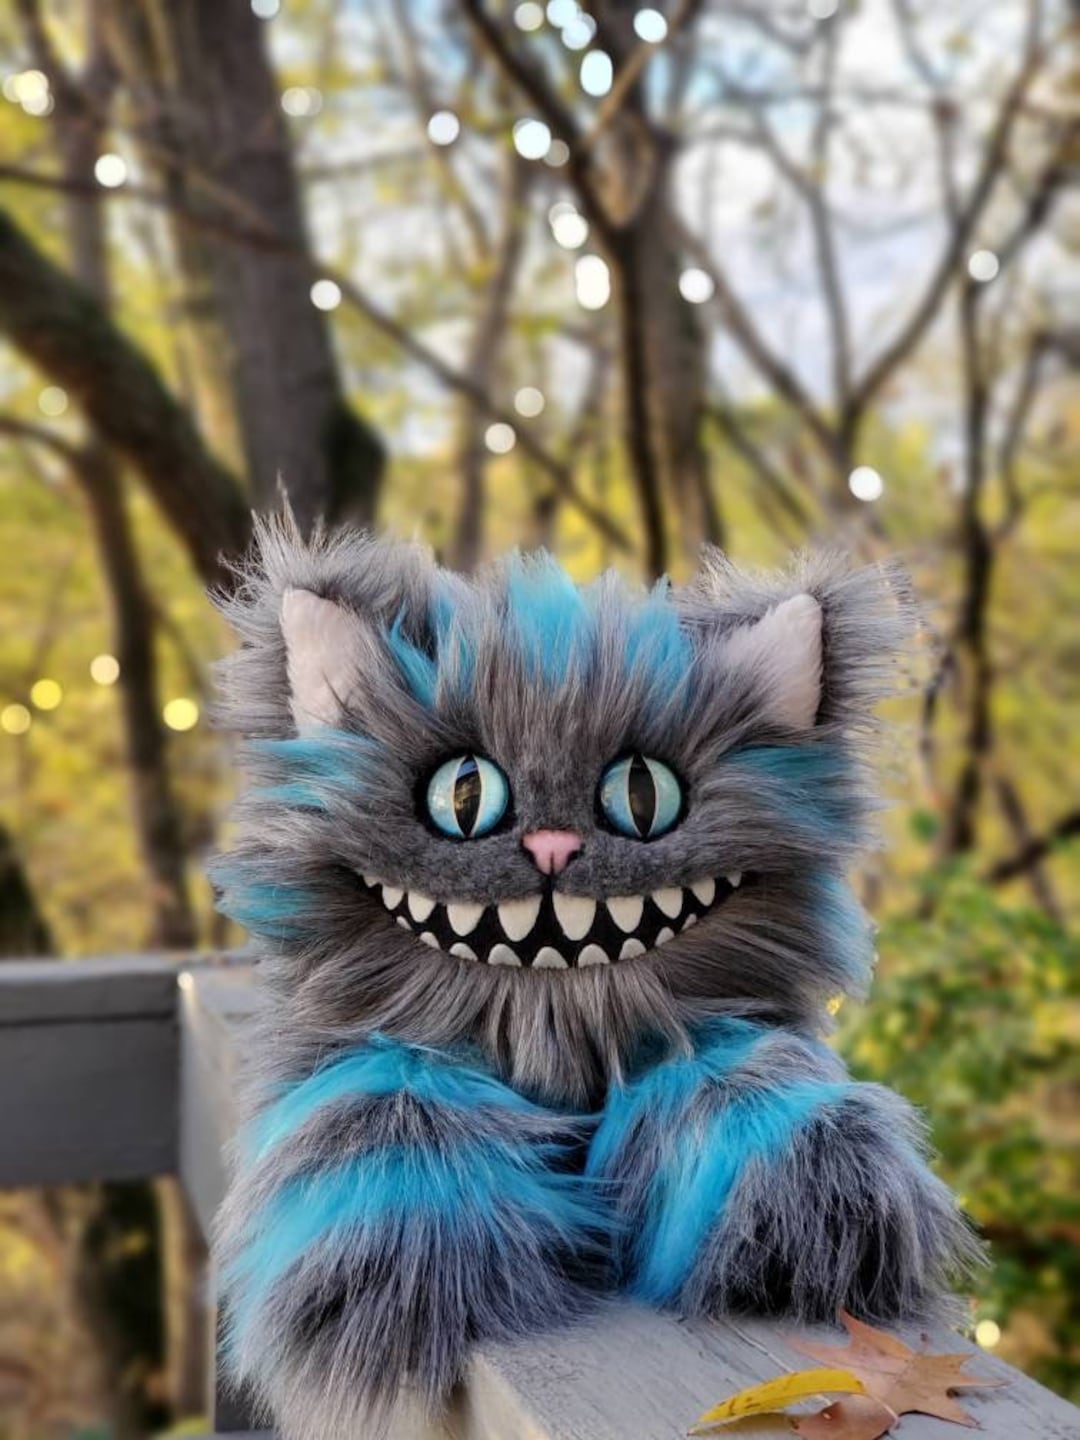 Cheshire Cat Rolling Tray – JoCo Custom Designs